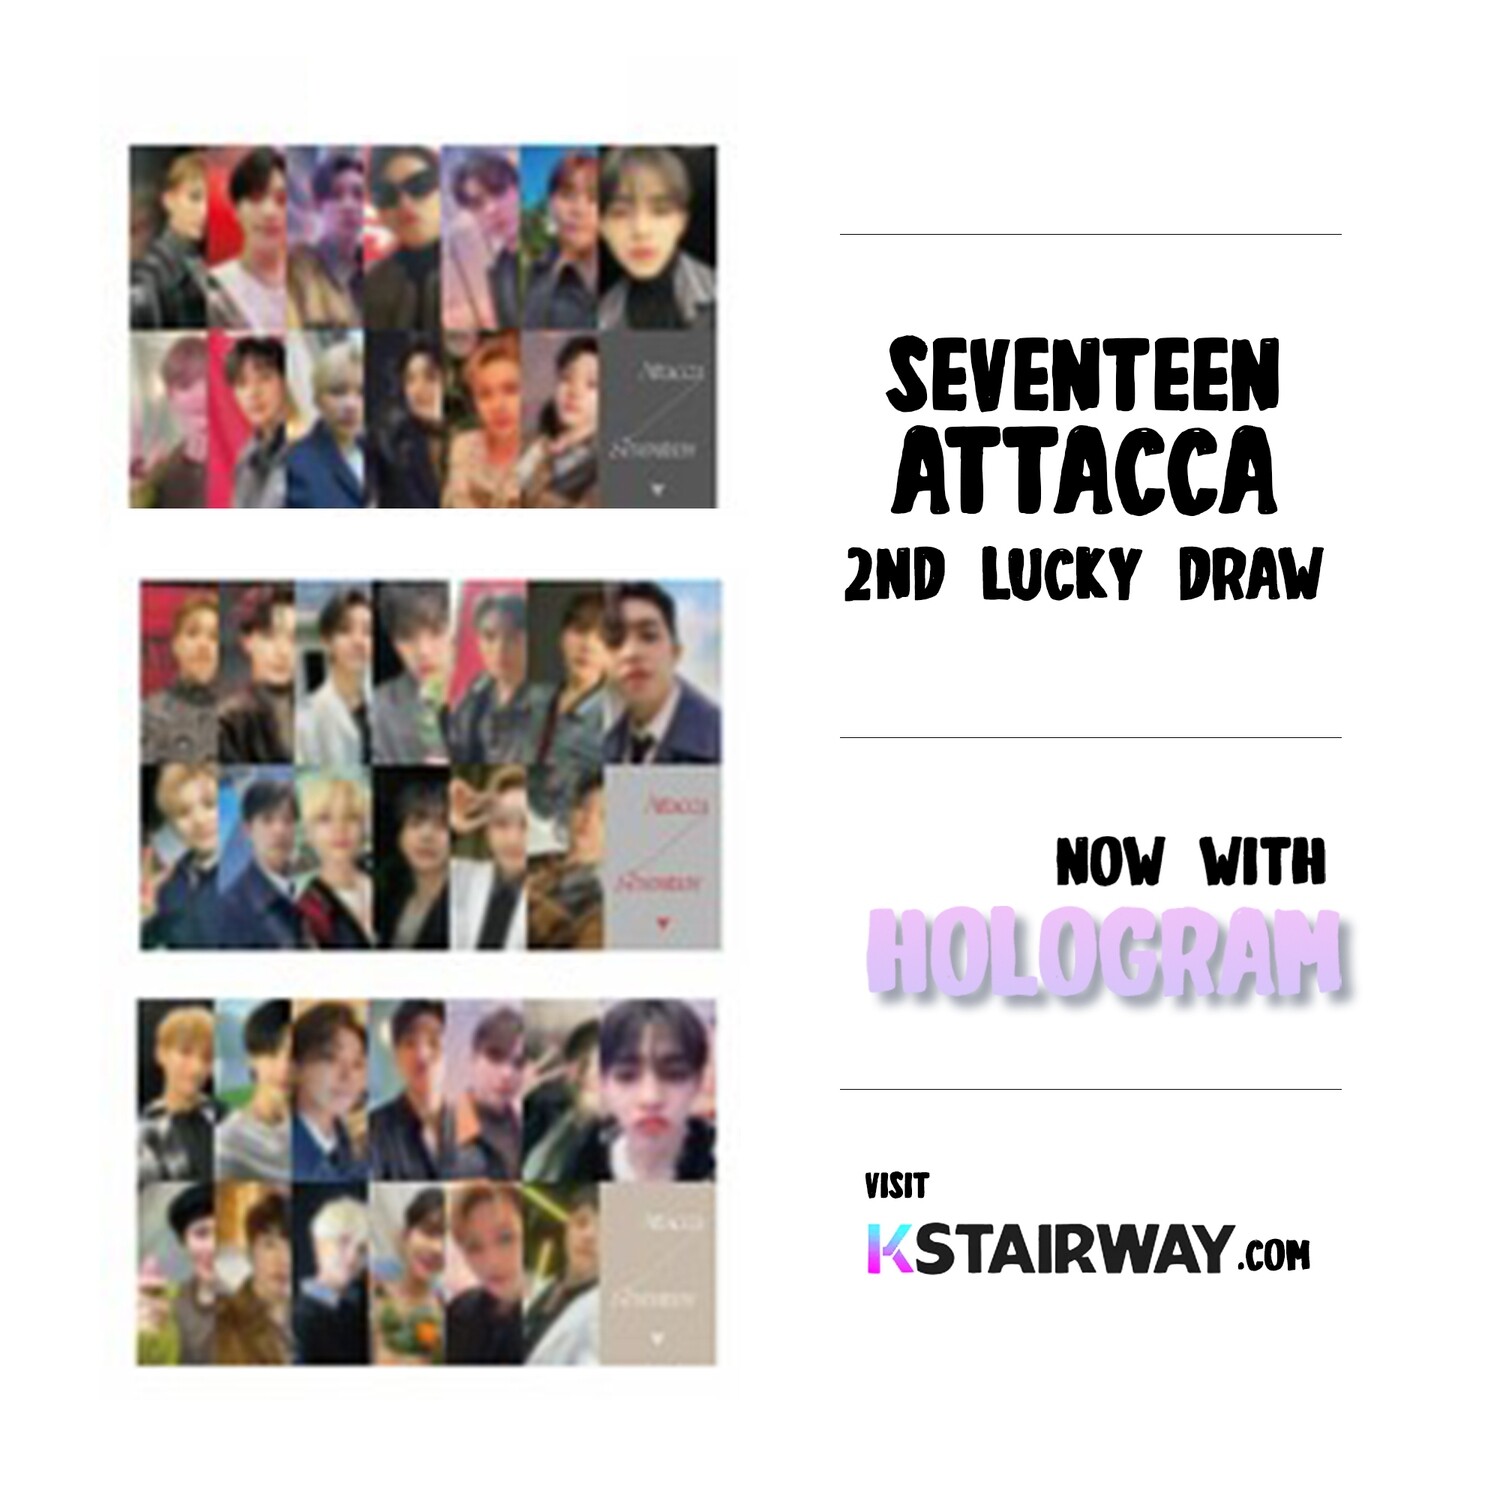 [SEVENTEEN] ATTACCA - 2nd Lucky Draw Photocard #luckydraw